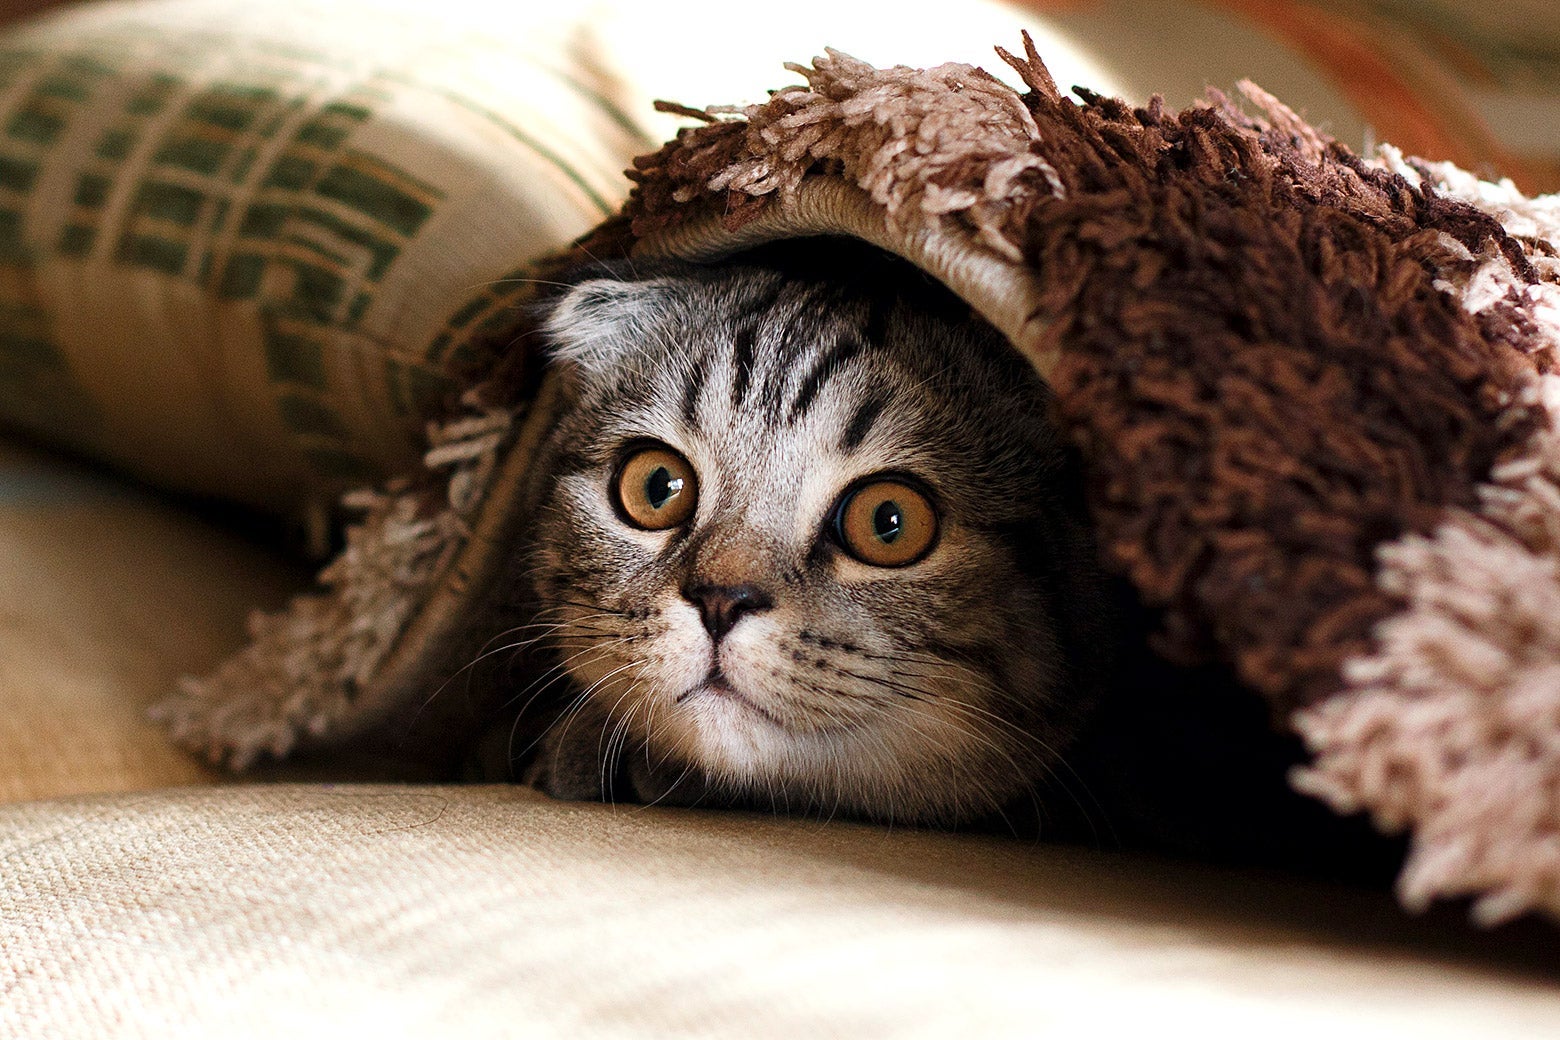 A cat hiding under a carpet.